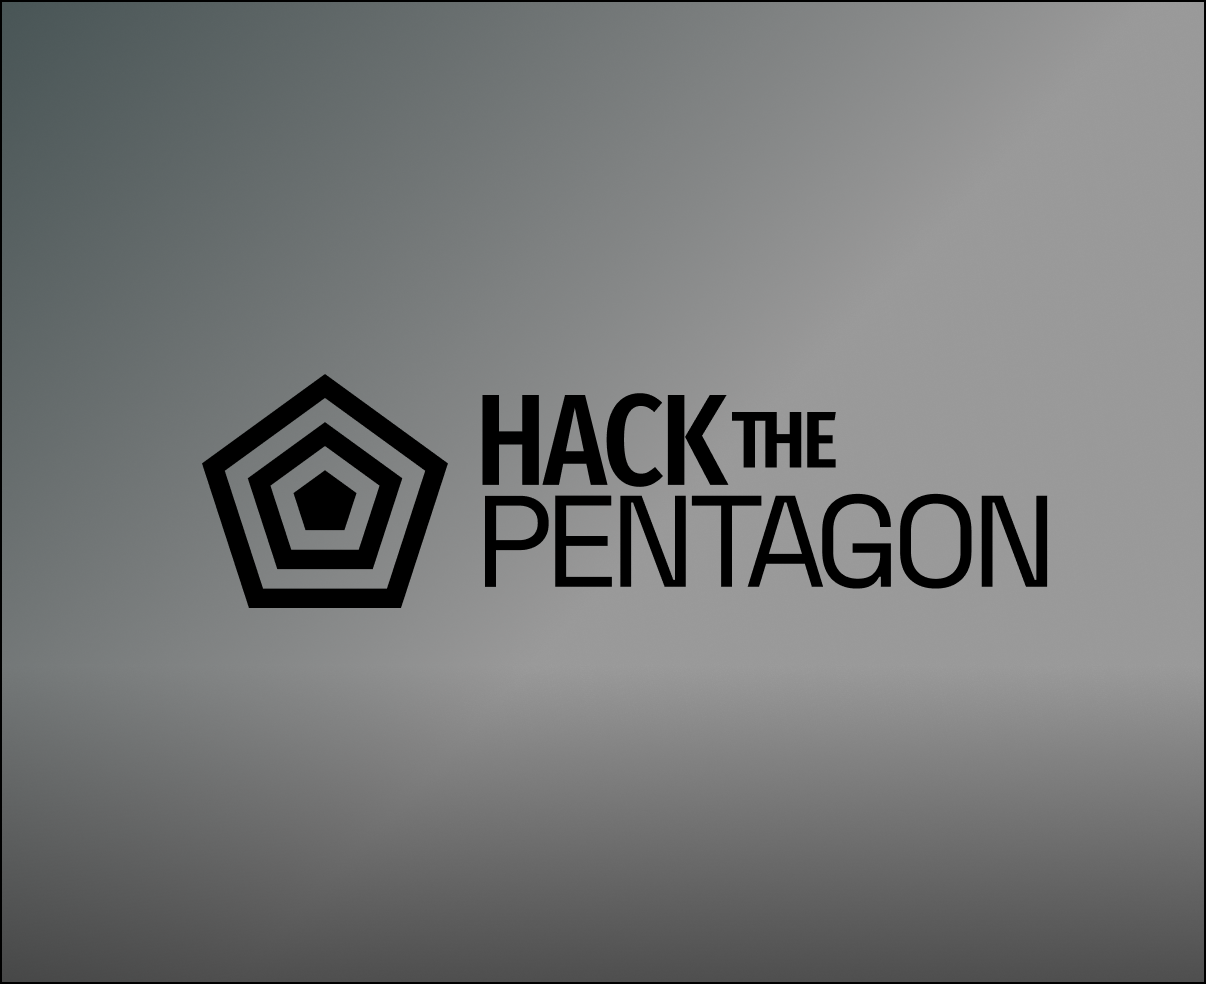 Hack the pentagon logo